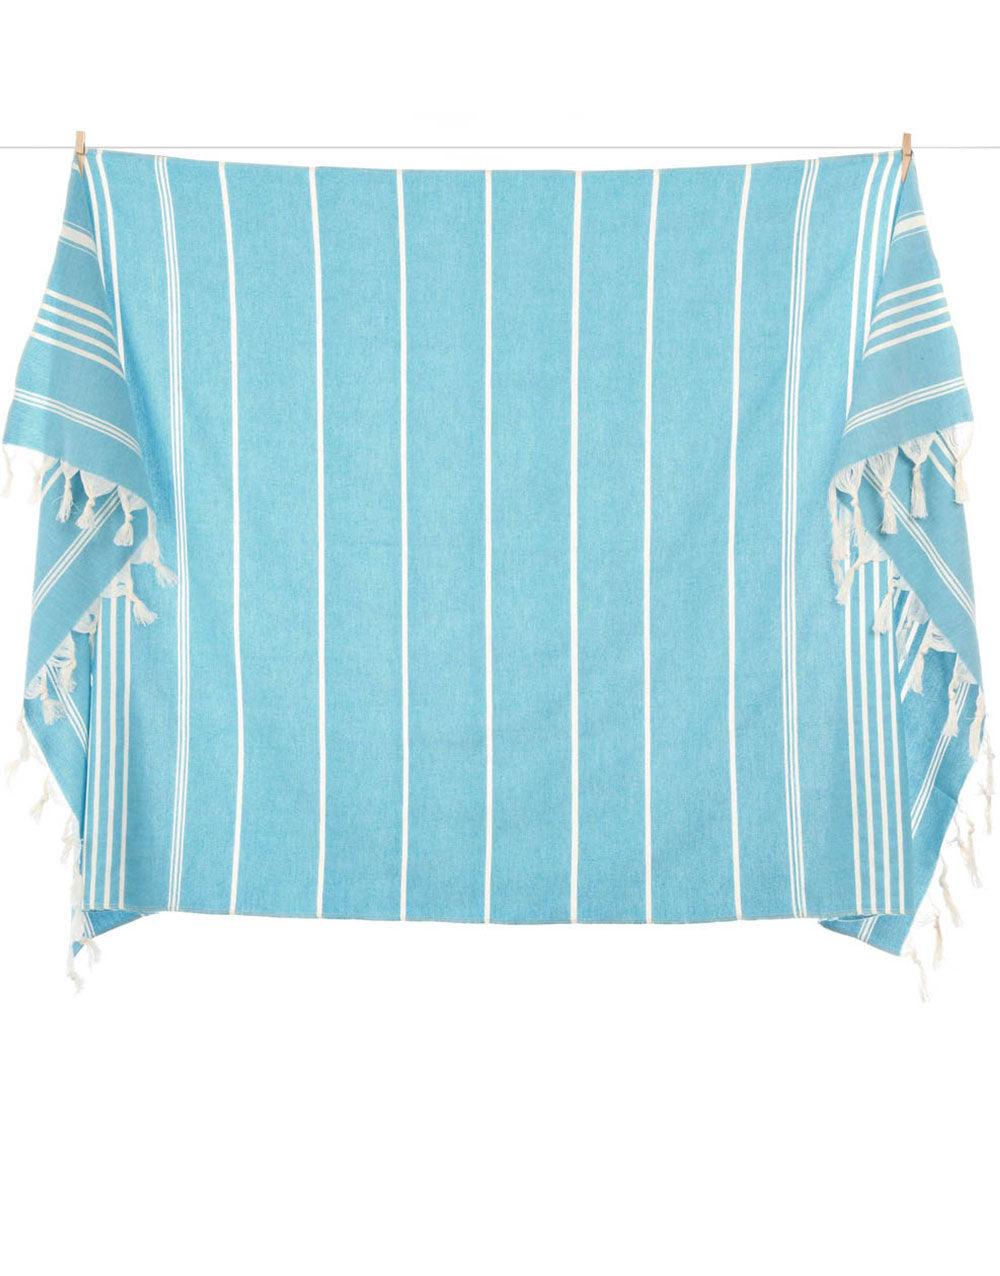 Cacala Luxury Beach Towel Sultan Peshtemal 39"x71" 100% Cotton - Cacala